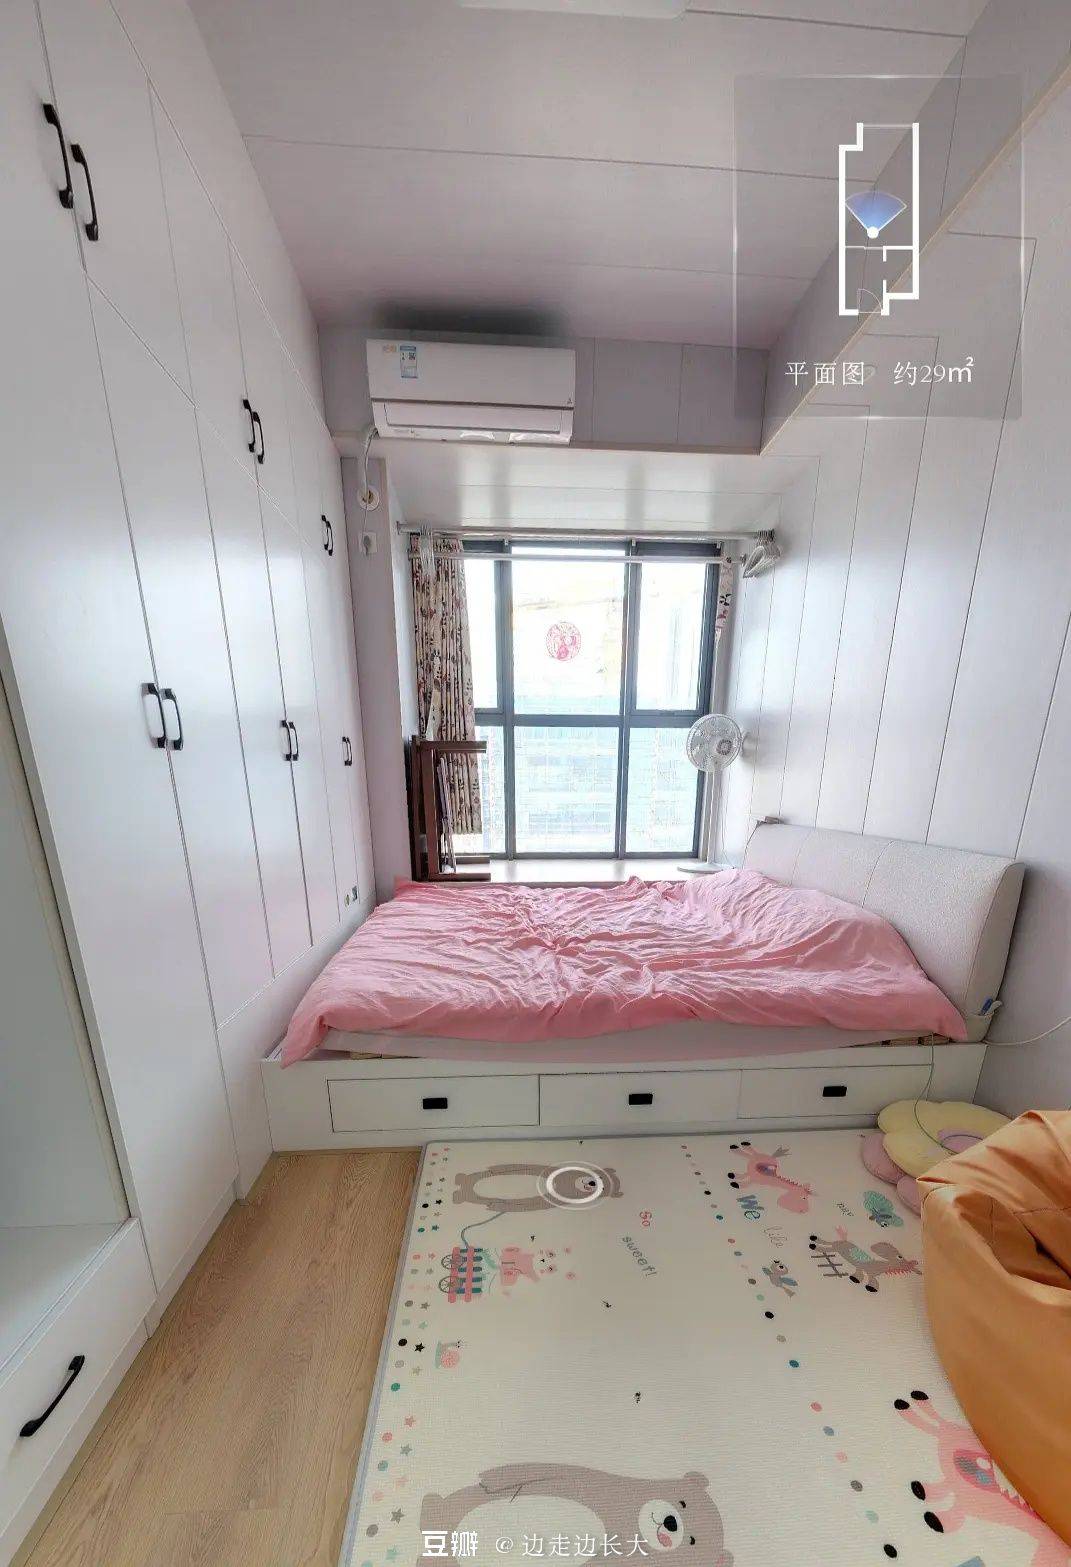 Suzhou-Gusu-Cozy Home,Clean&Comfy,No Gender Limit,LGBTQ Friendly,Pet Friendly